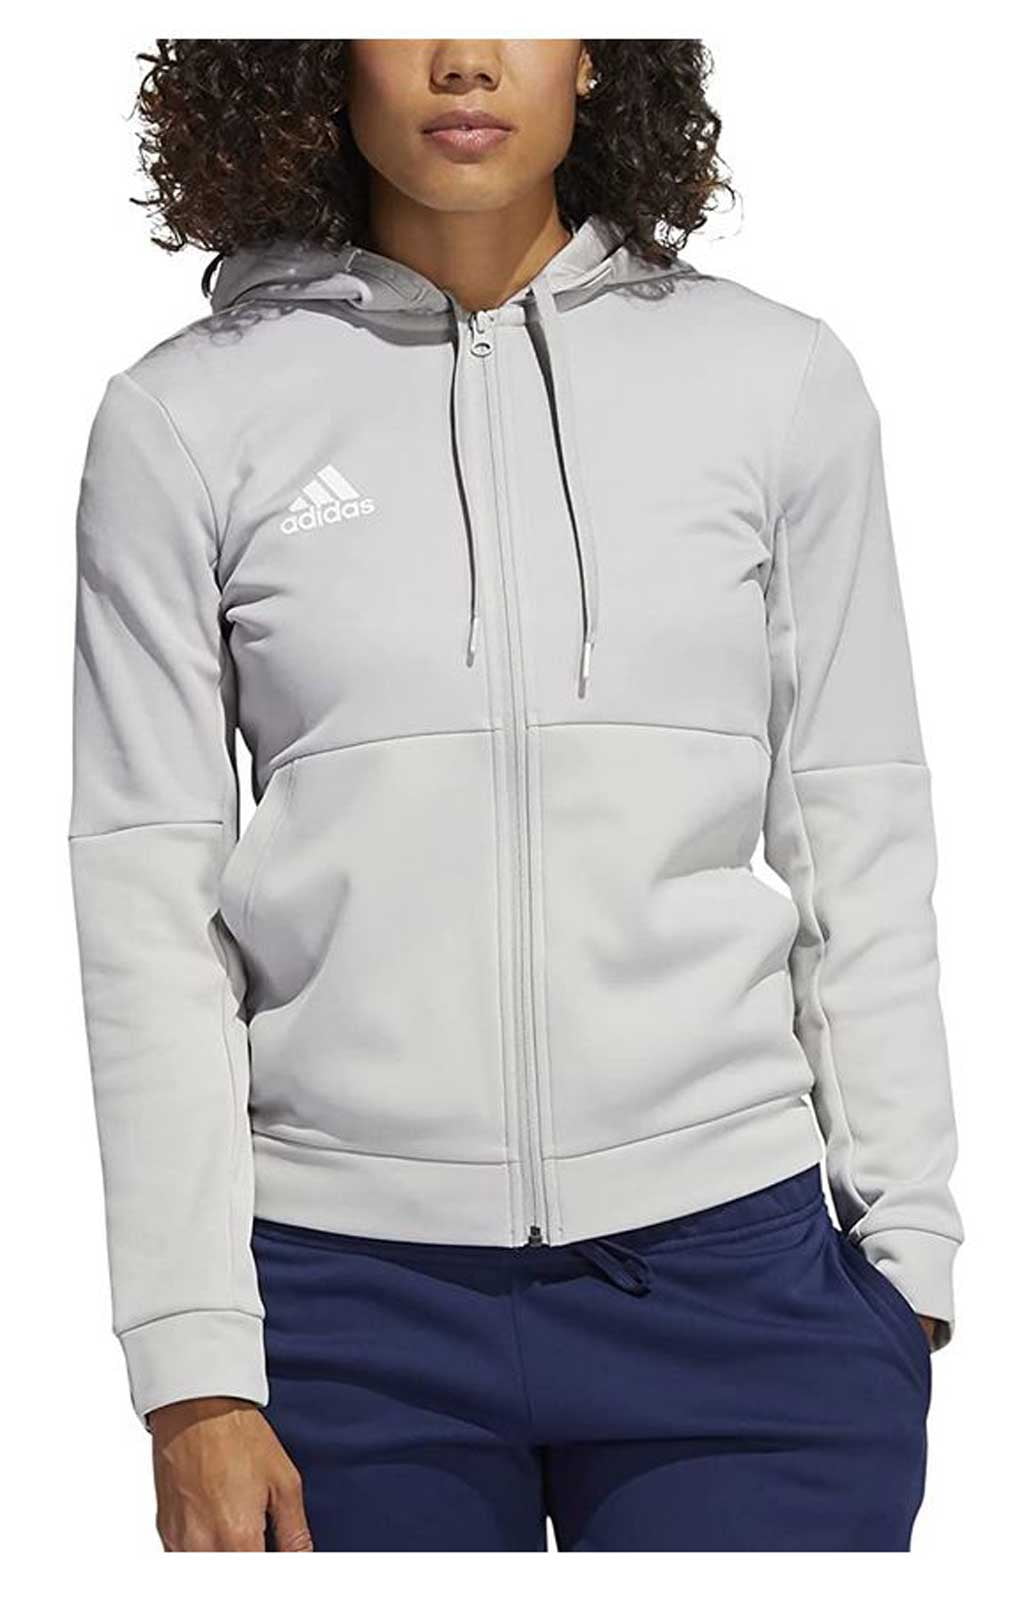 Adidas Women's TI FZ Jacket, Moisture - Gray/White (XS) - Walmart.com